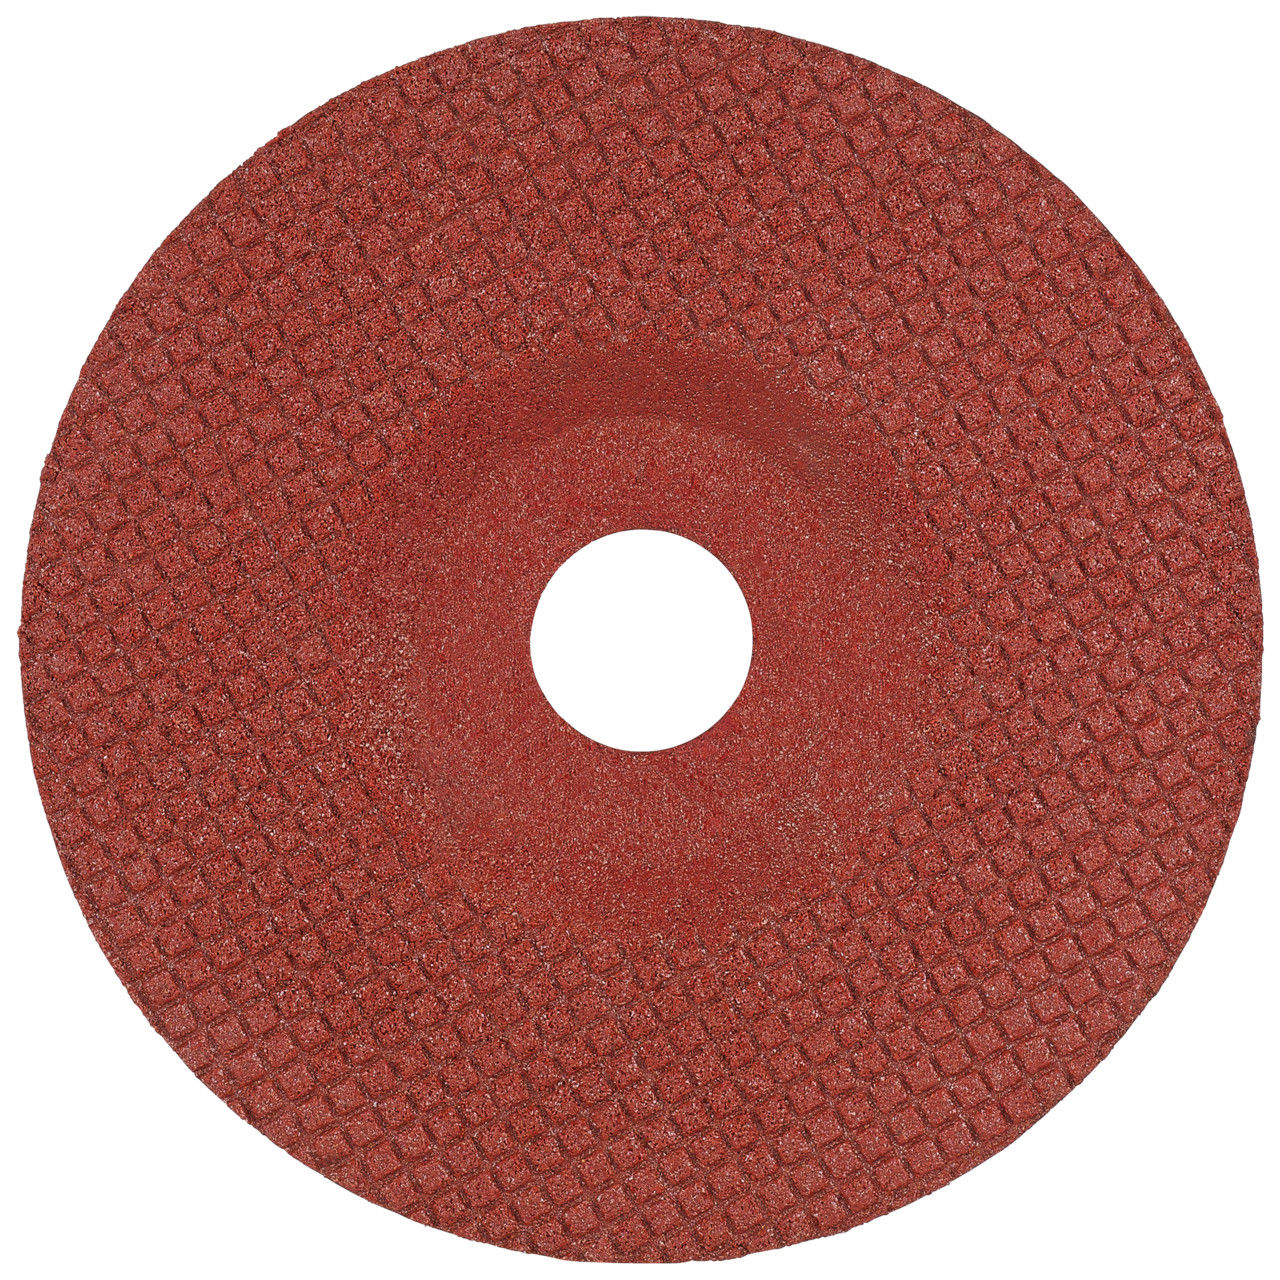 Disco Tyrolit DxH 125x22.23 TOUCH per acciaio inox e metalli non ferrosi, forma: 29T - versione offset, Art. 236319